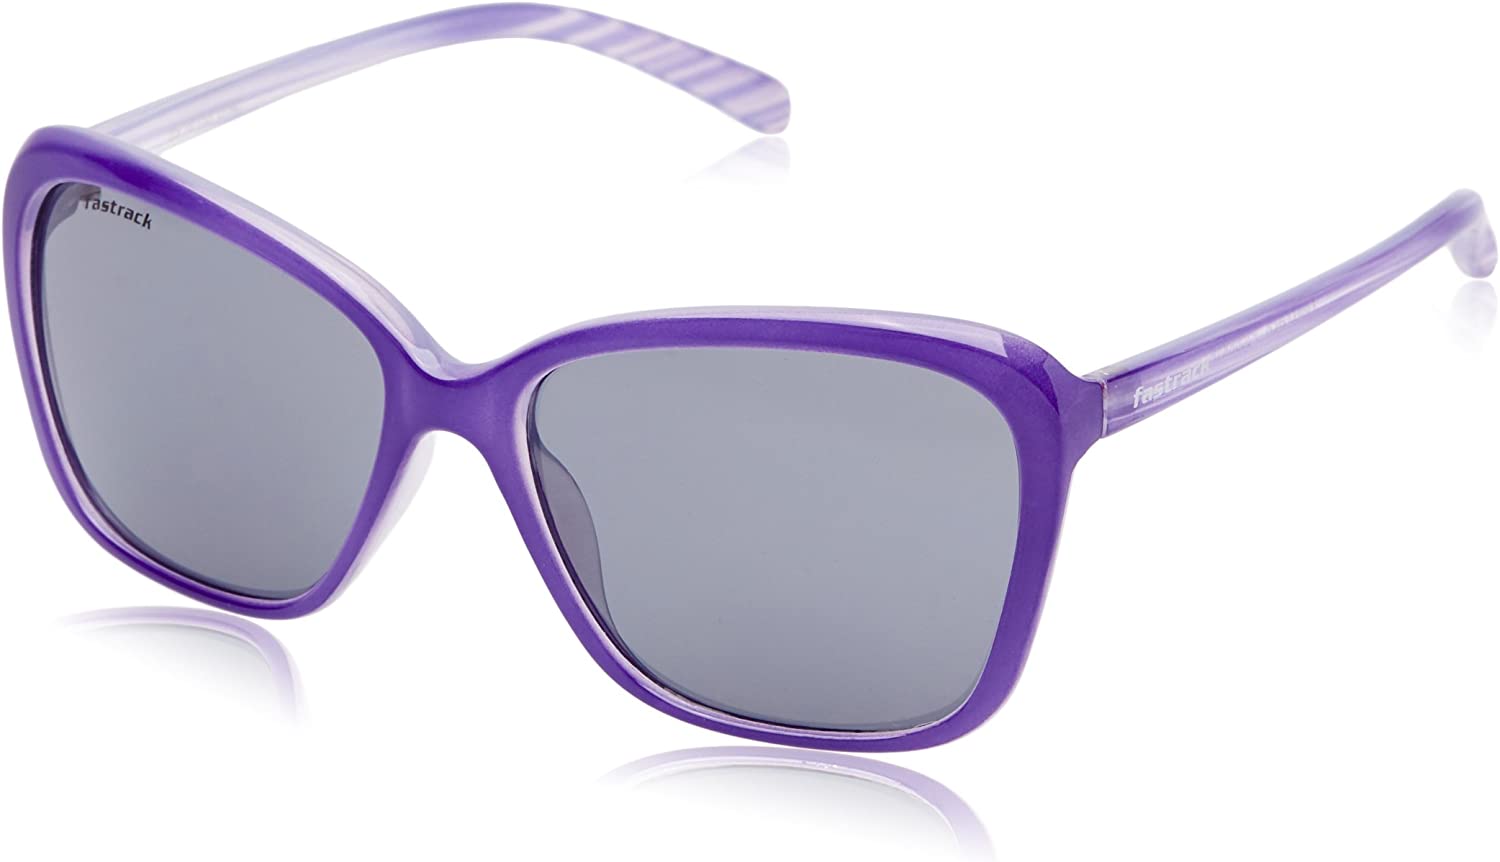 Fastrack UV Protected Oval Women's Sunglasses P306BK1FSmoke Grey & Black